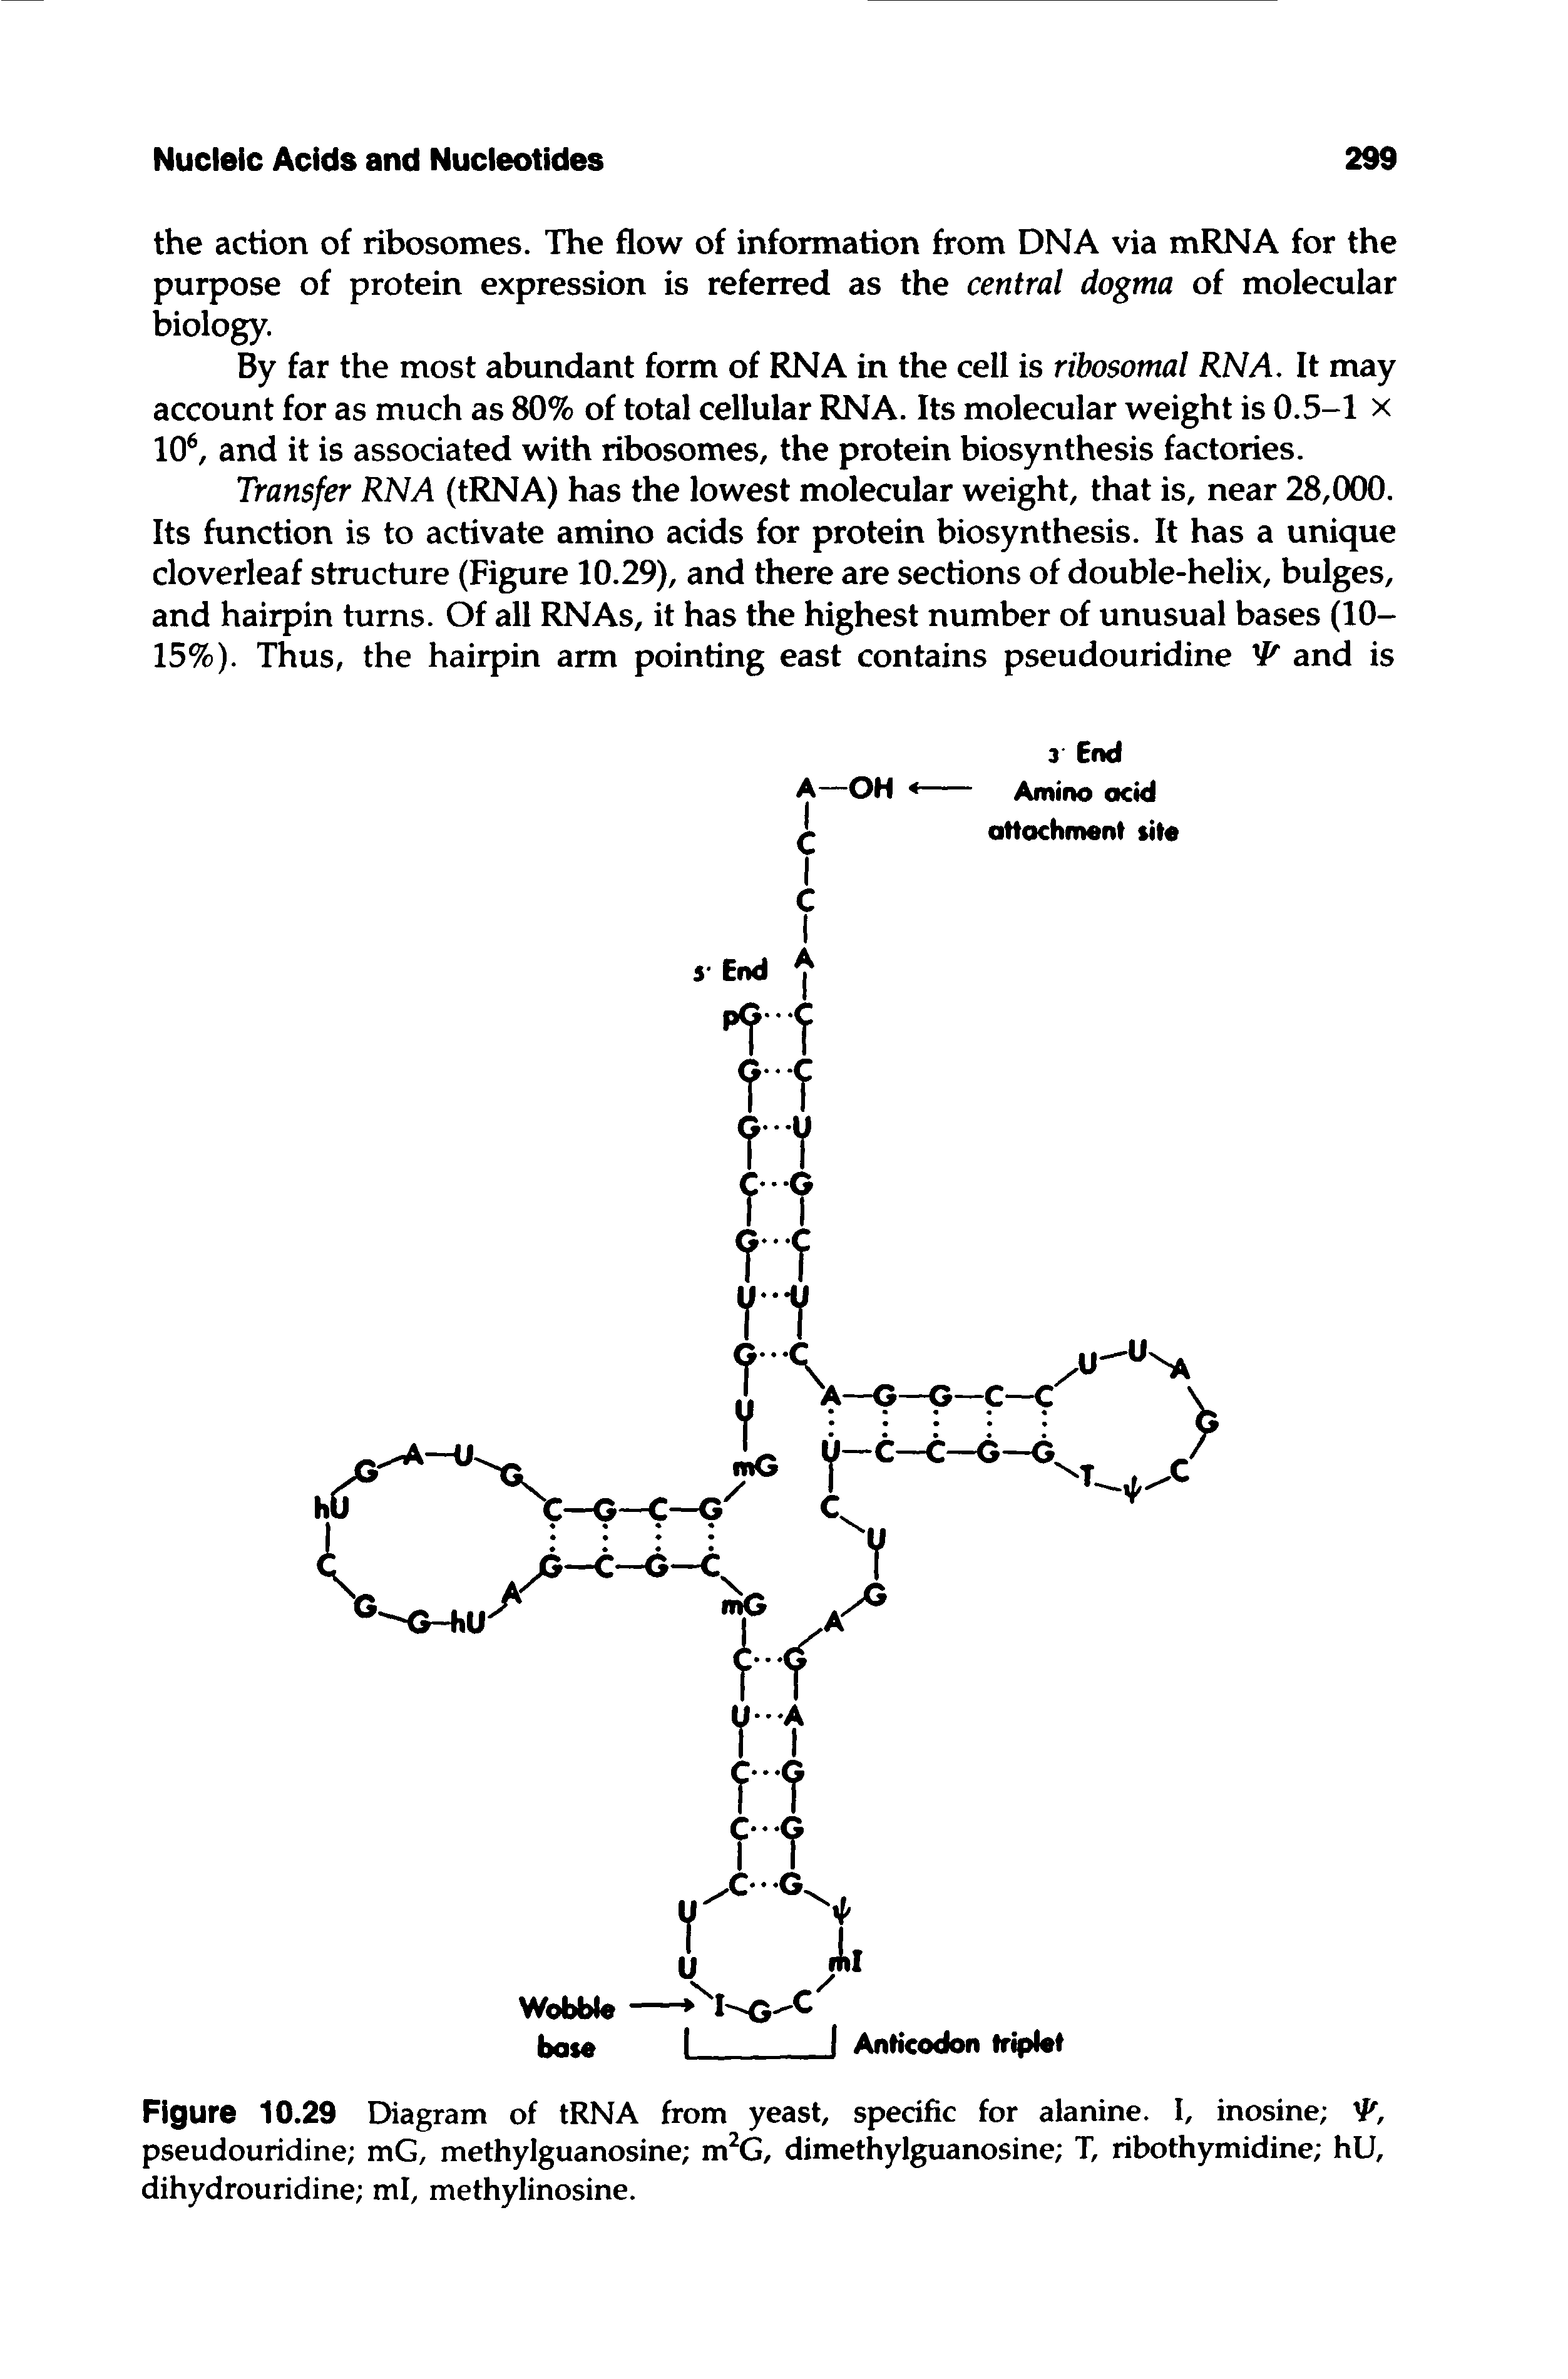 Figure 10.29 Diagram of tRNA from yeast, specific for alanine. I, inosine V pseudouridine mG, methylguanosine m2G, dimethylguanosine T, ribothymidine hU, dihydrouridine ml, methylinosine.